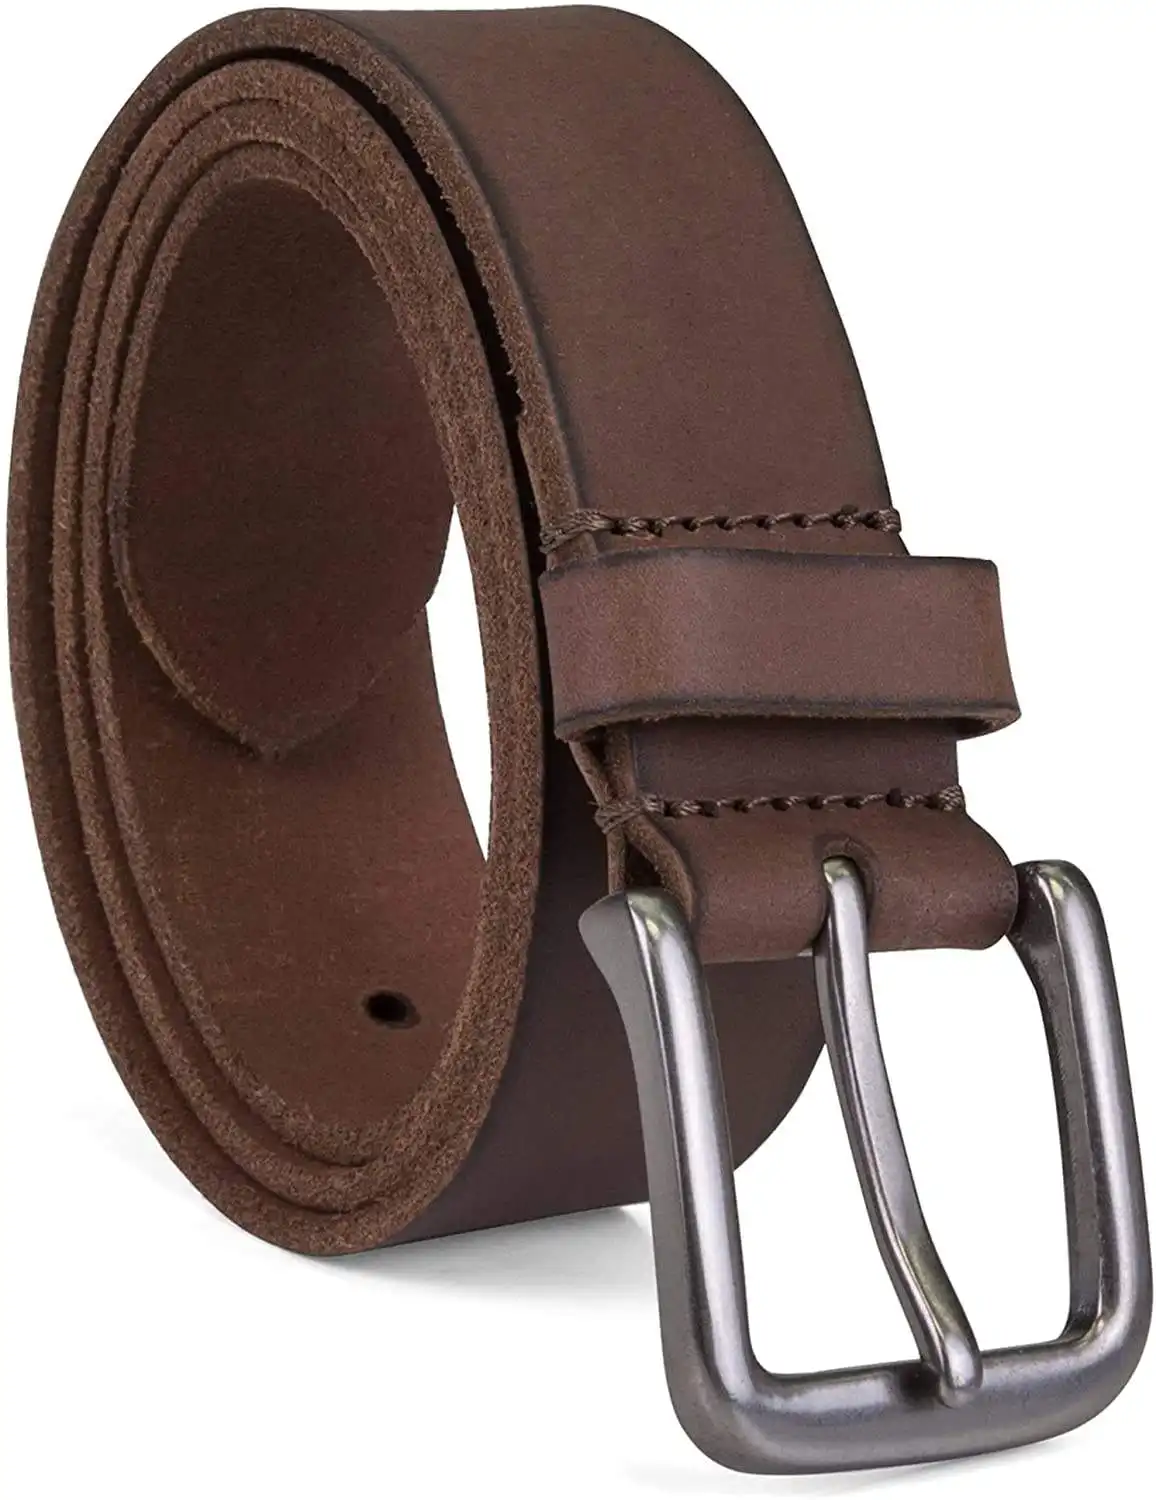 Customized Belt Men's Metal Automatic buckle Black Belt and Wallet Leather Gift Set Genuine Leather Belt